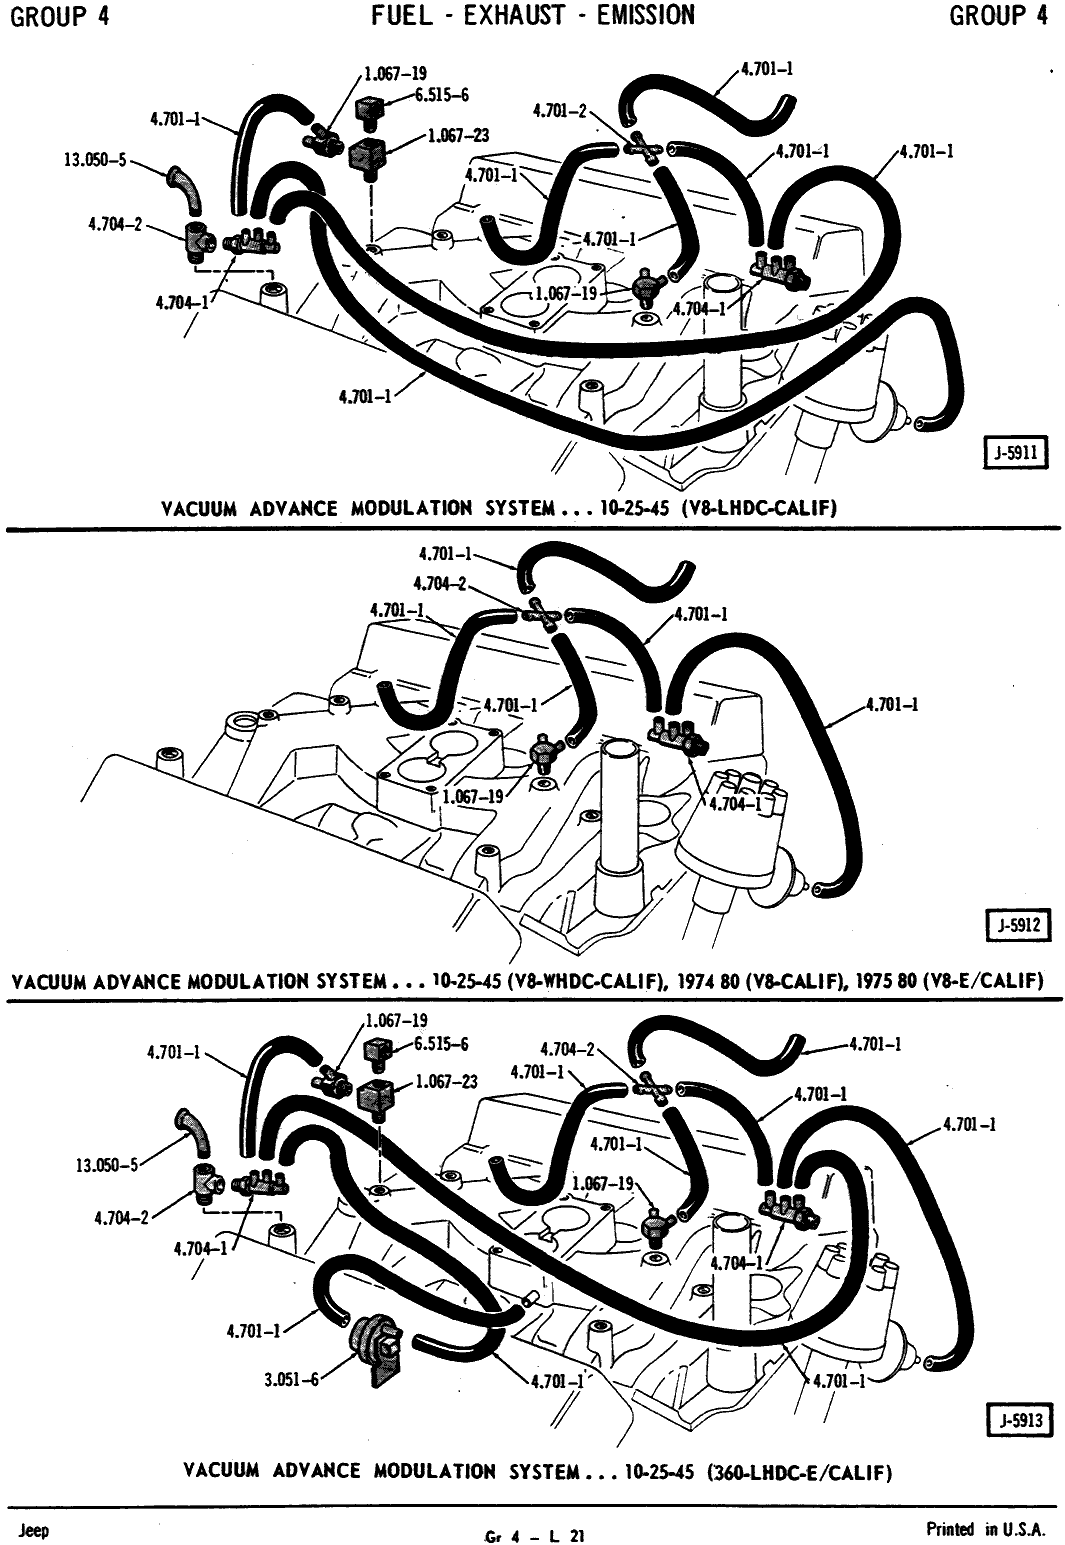 1996 Jeep vacuum diagrams #5